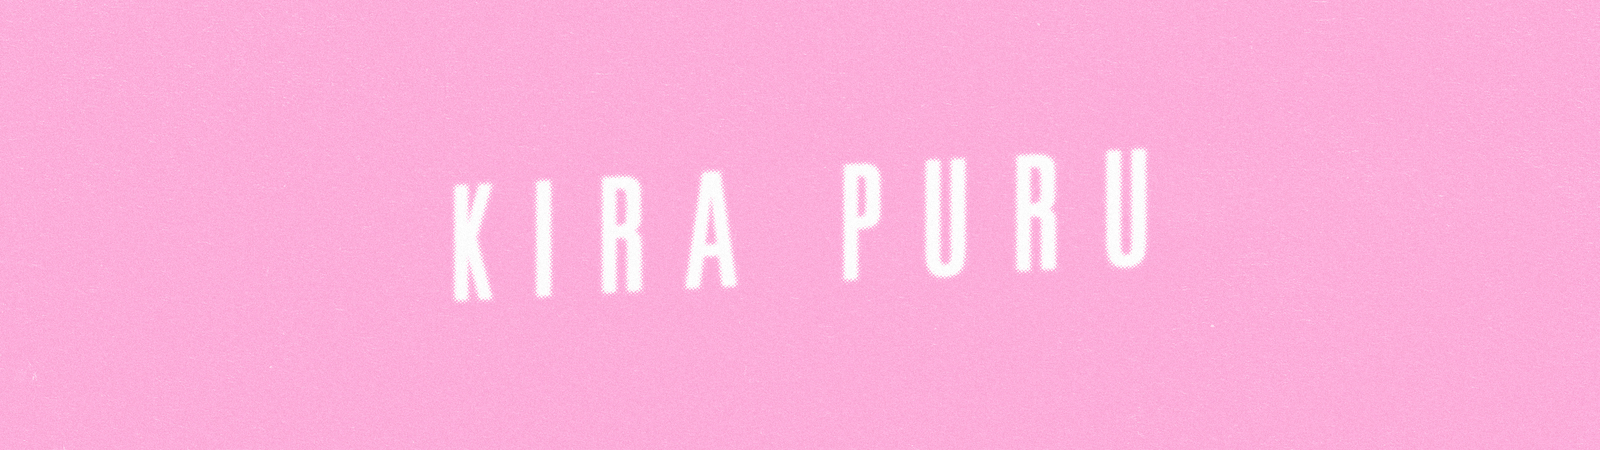 Kira Puru